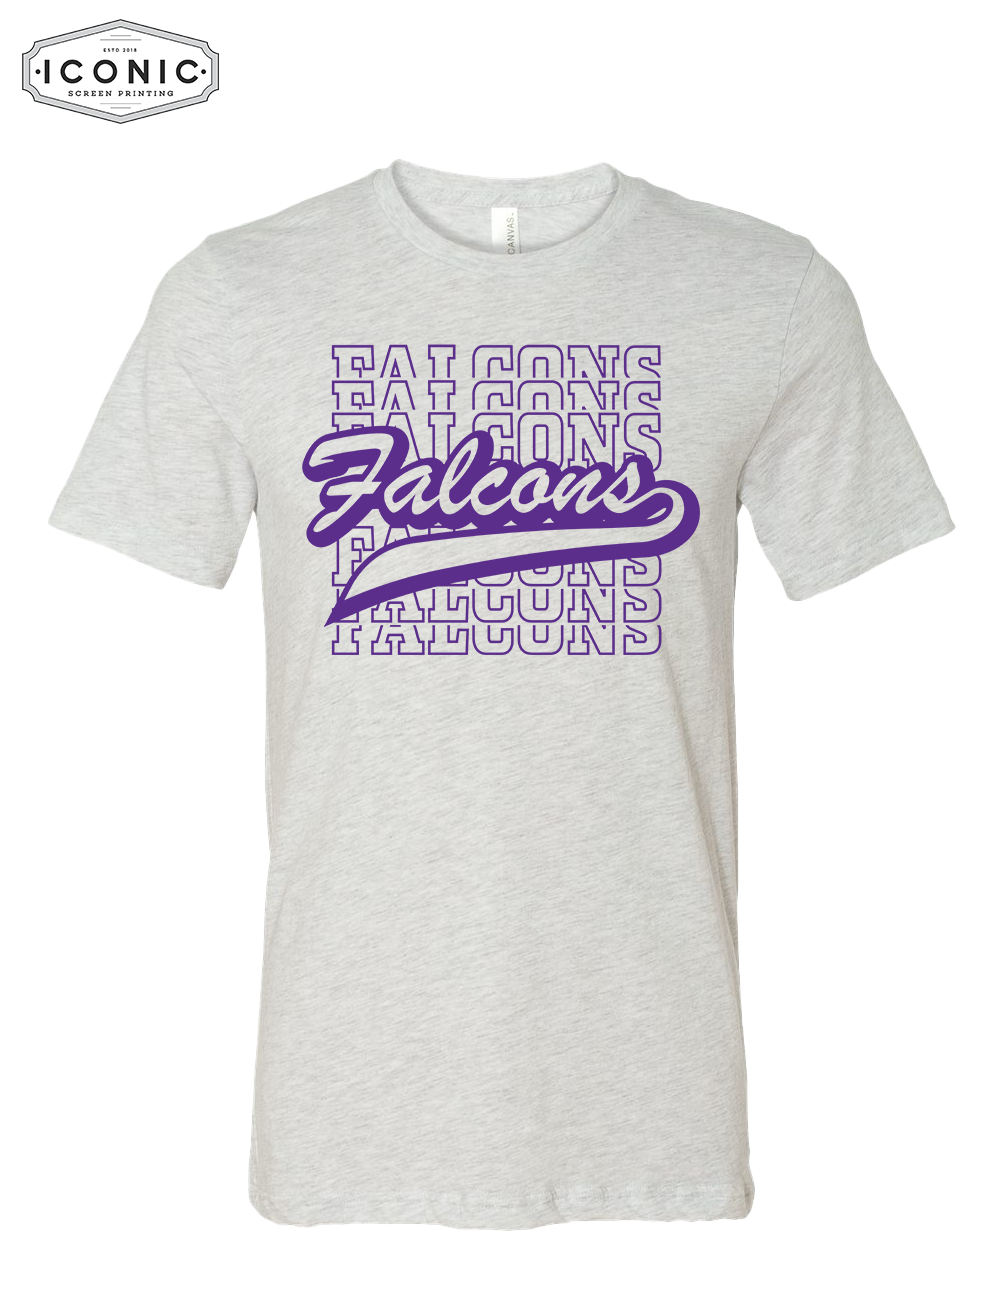 Falcons, Falcons, Falcons - Unisex Jersey Tee